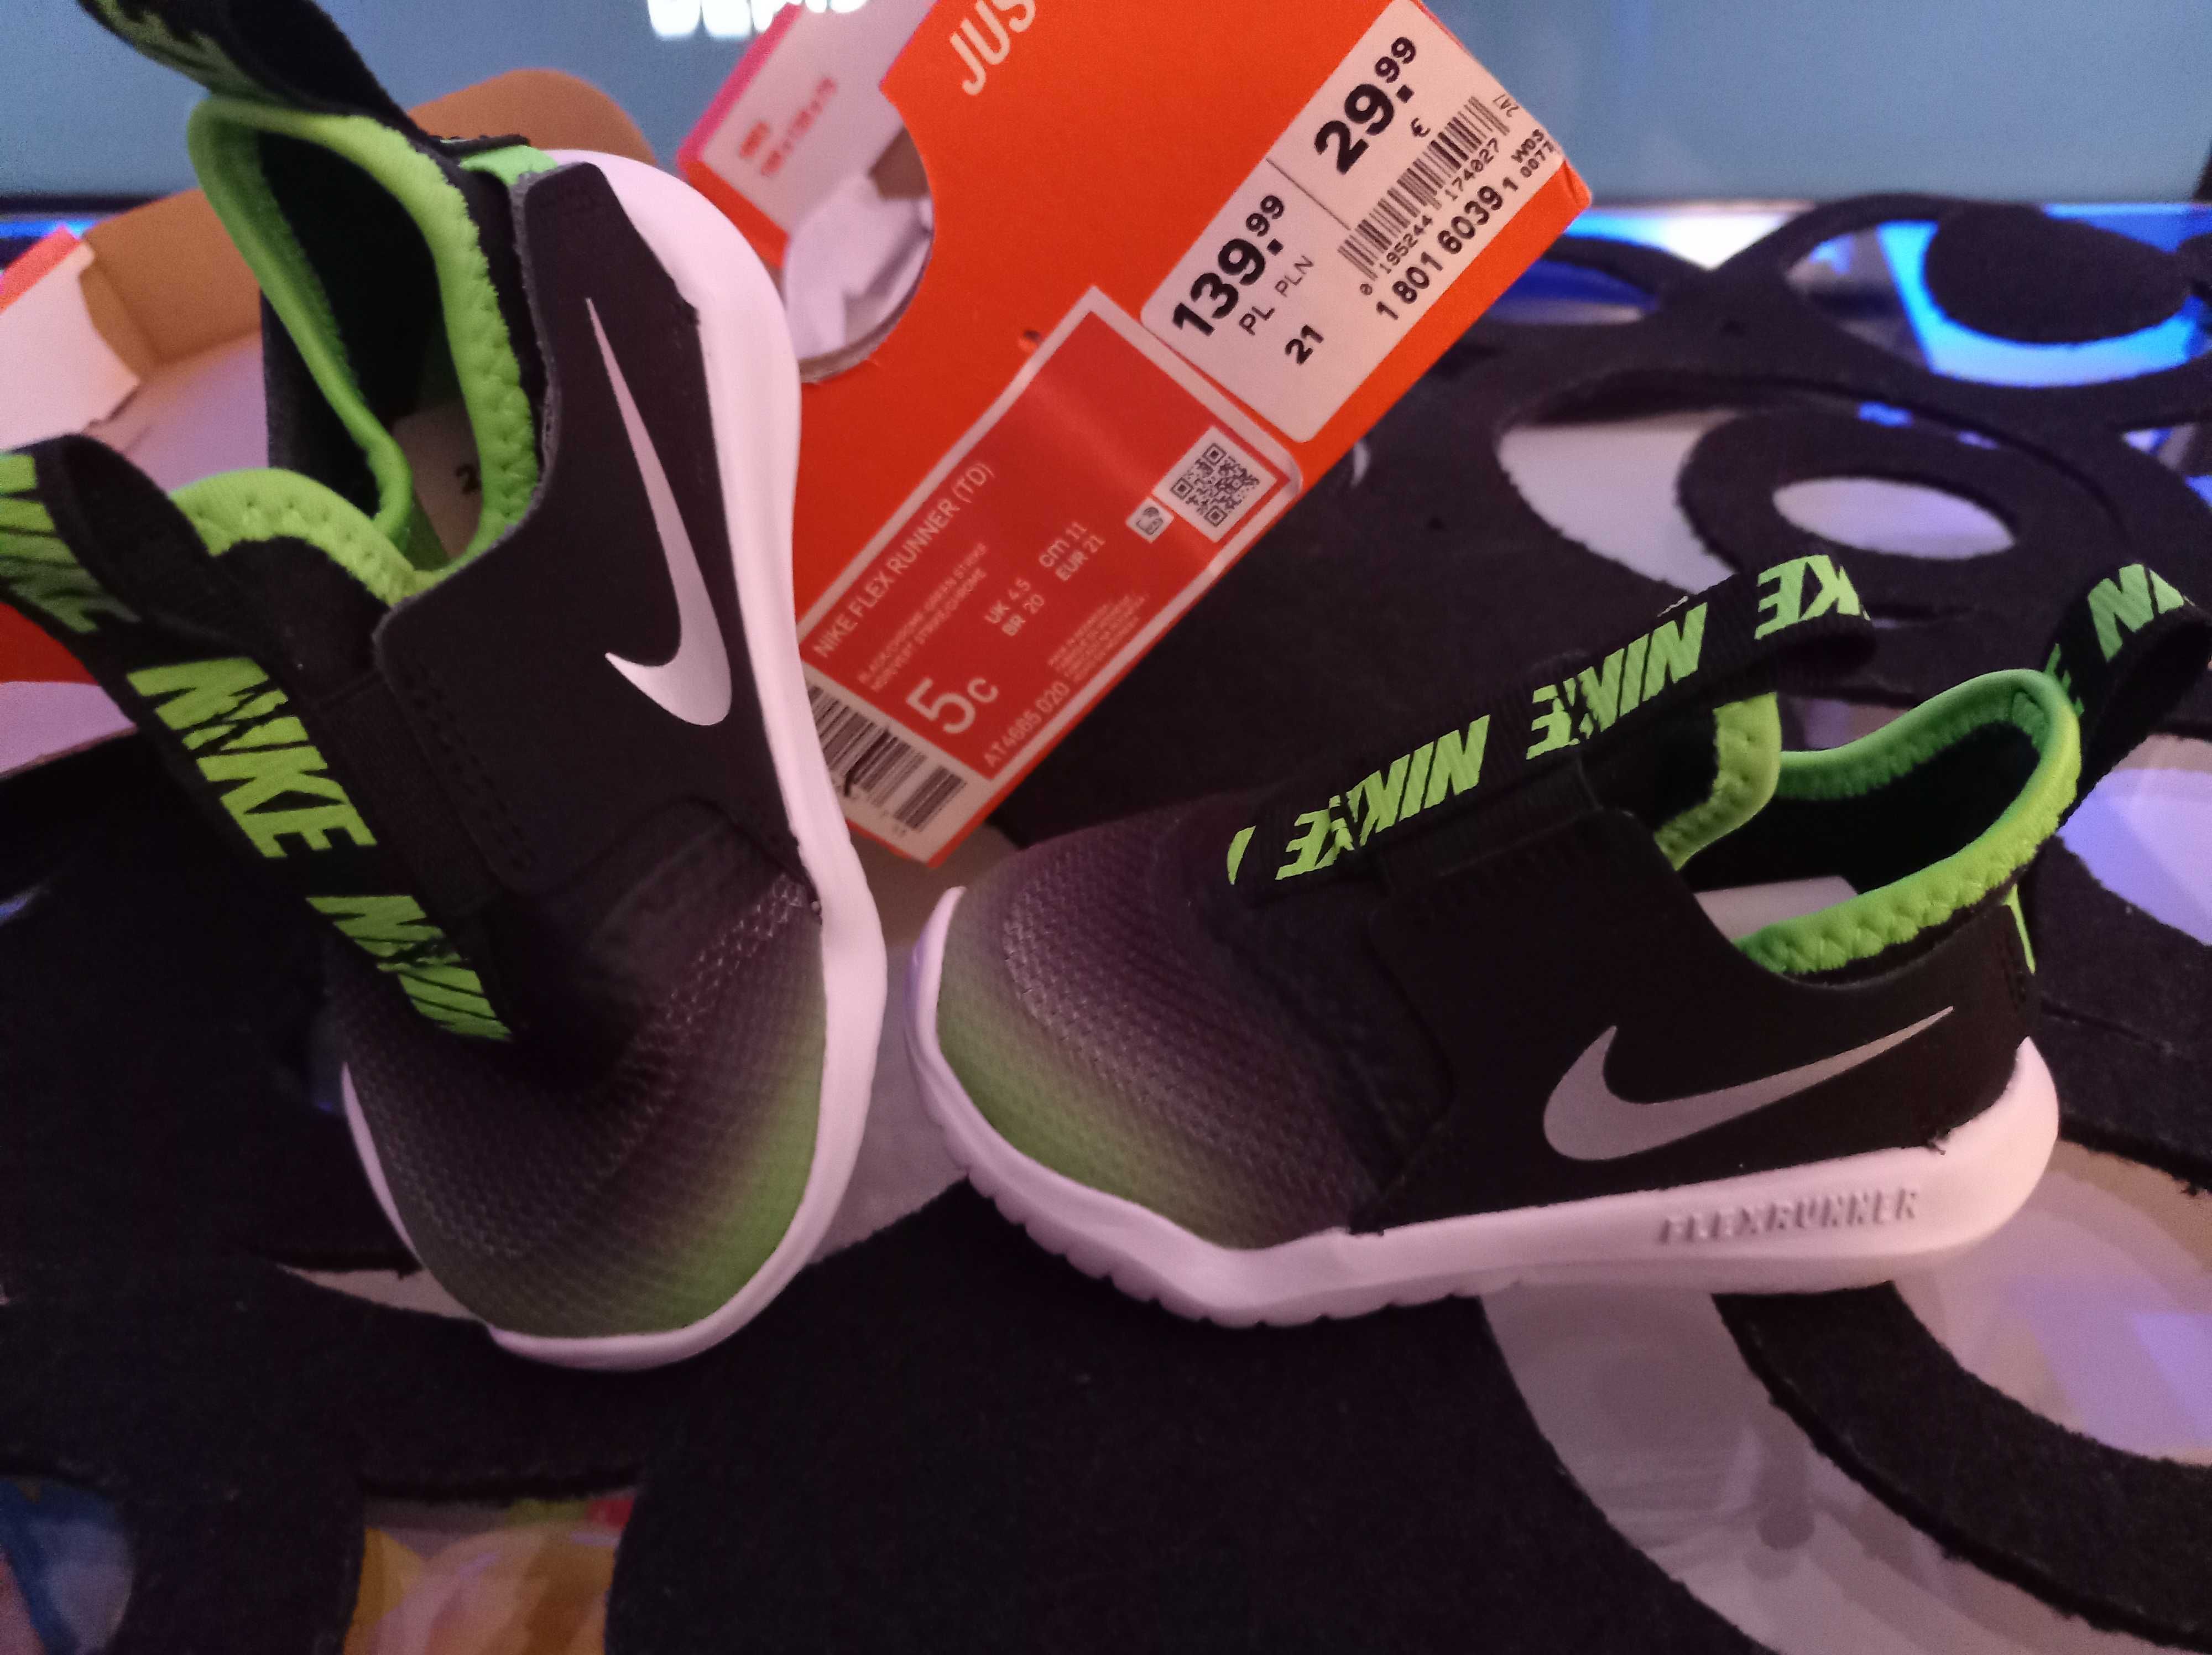 Buciki chłopięce Nike Flex Runner rozmiar 21